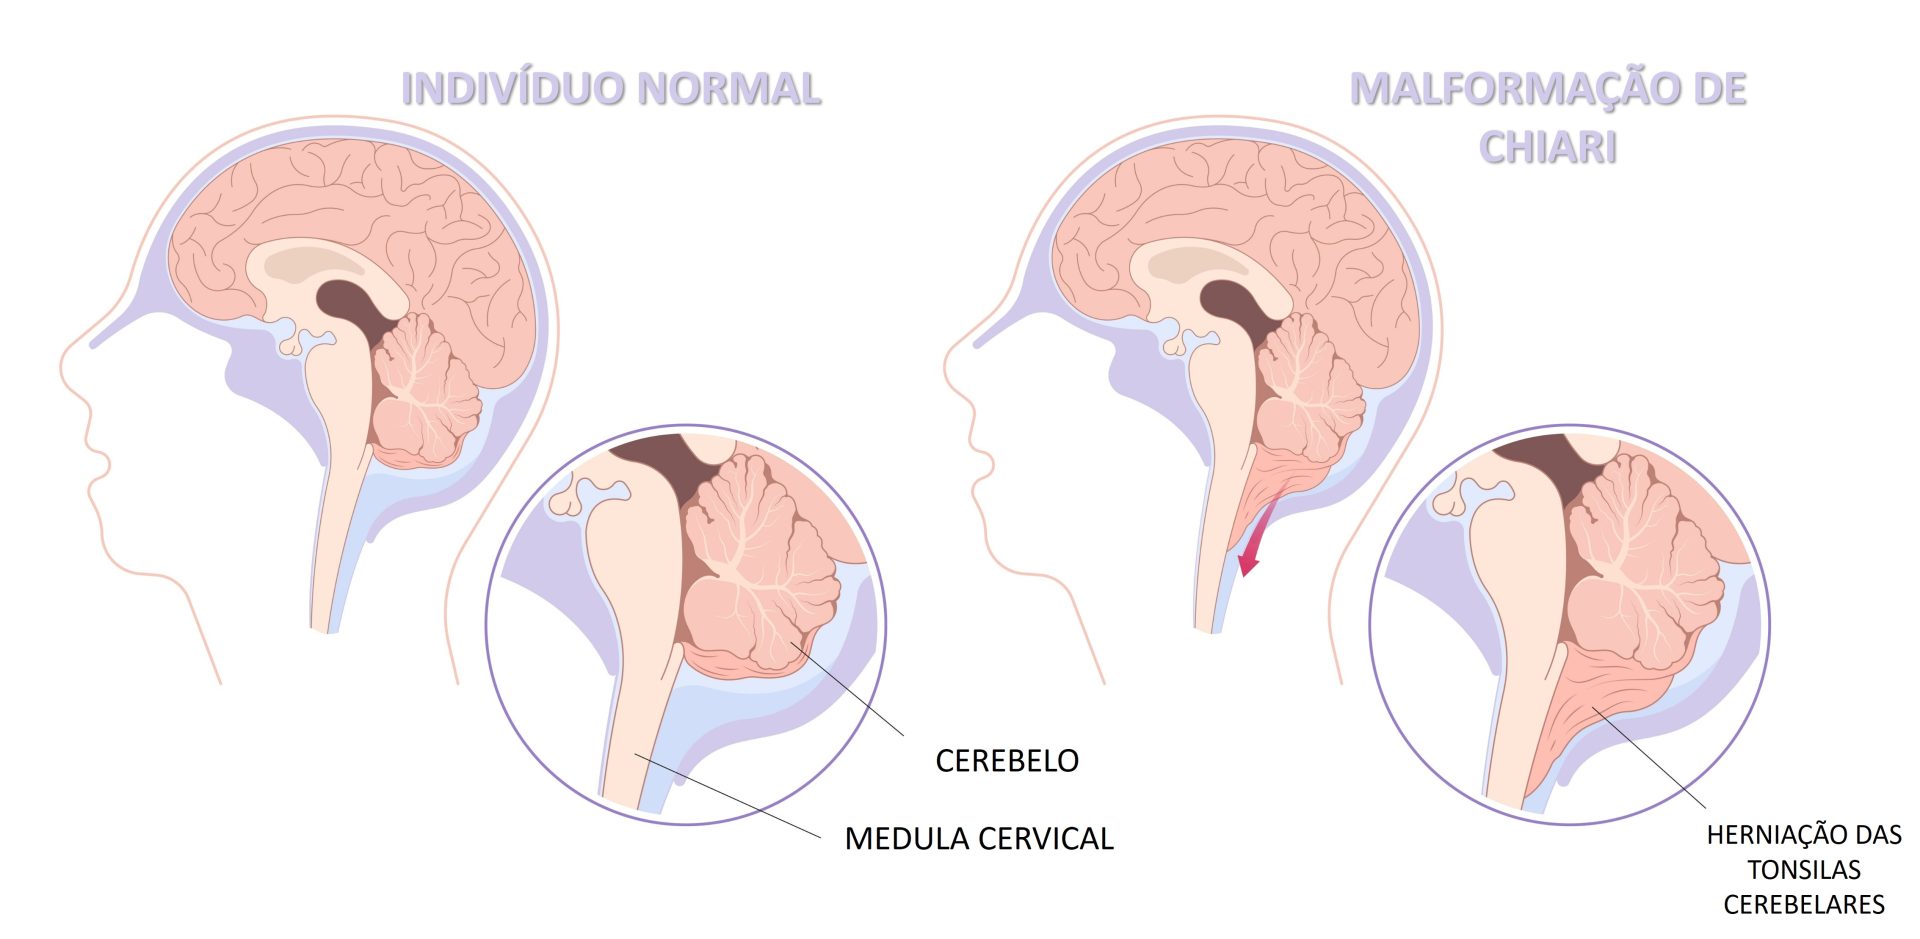 Malformação De Chiari Dra Raquel Rodrigues Neurocirurgia Pediátrica 9292